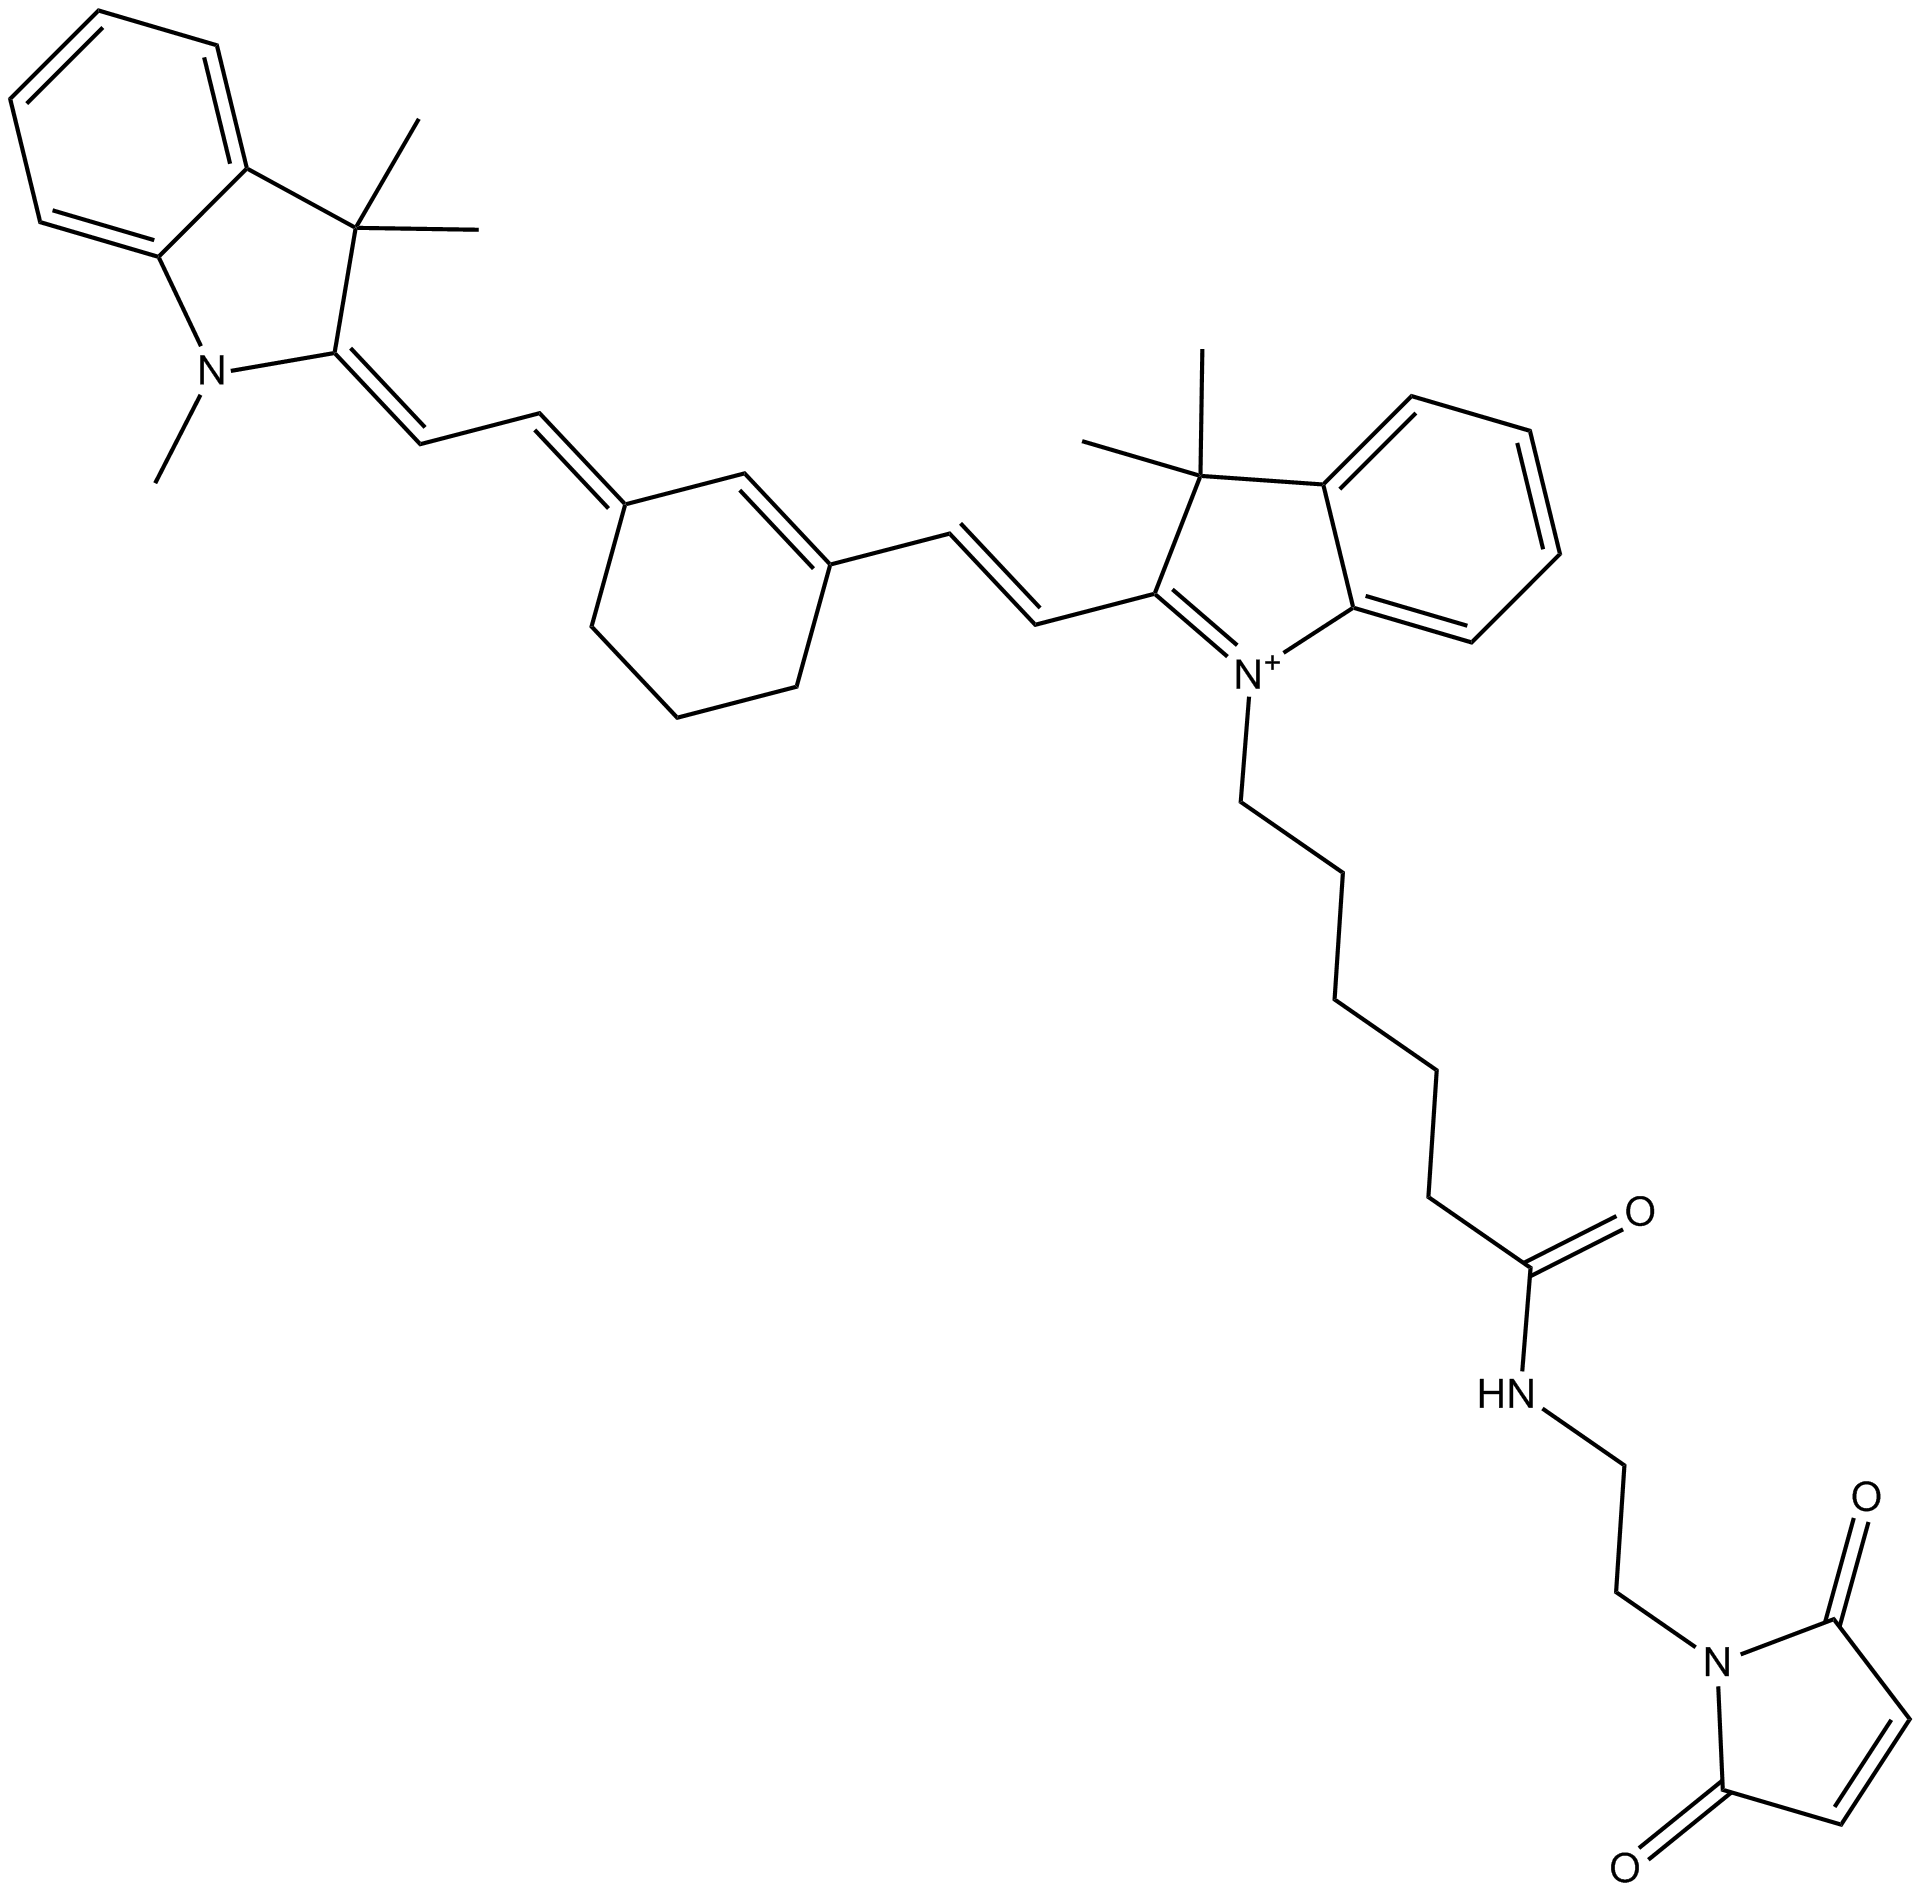 Cy7 maleimide (non-sulfonated)